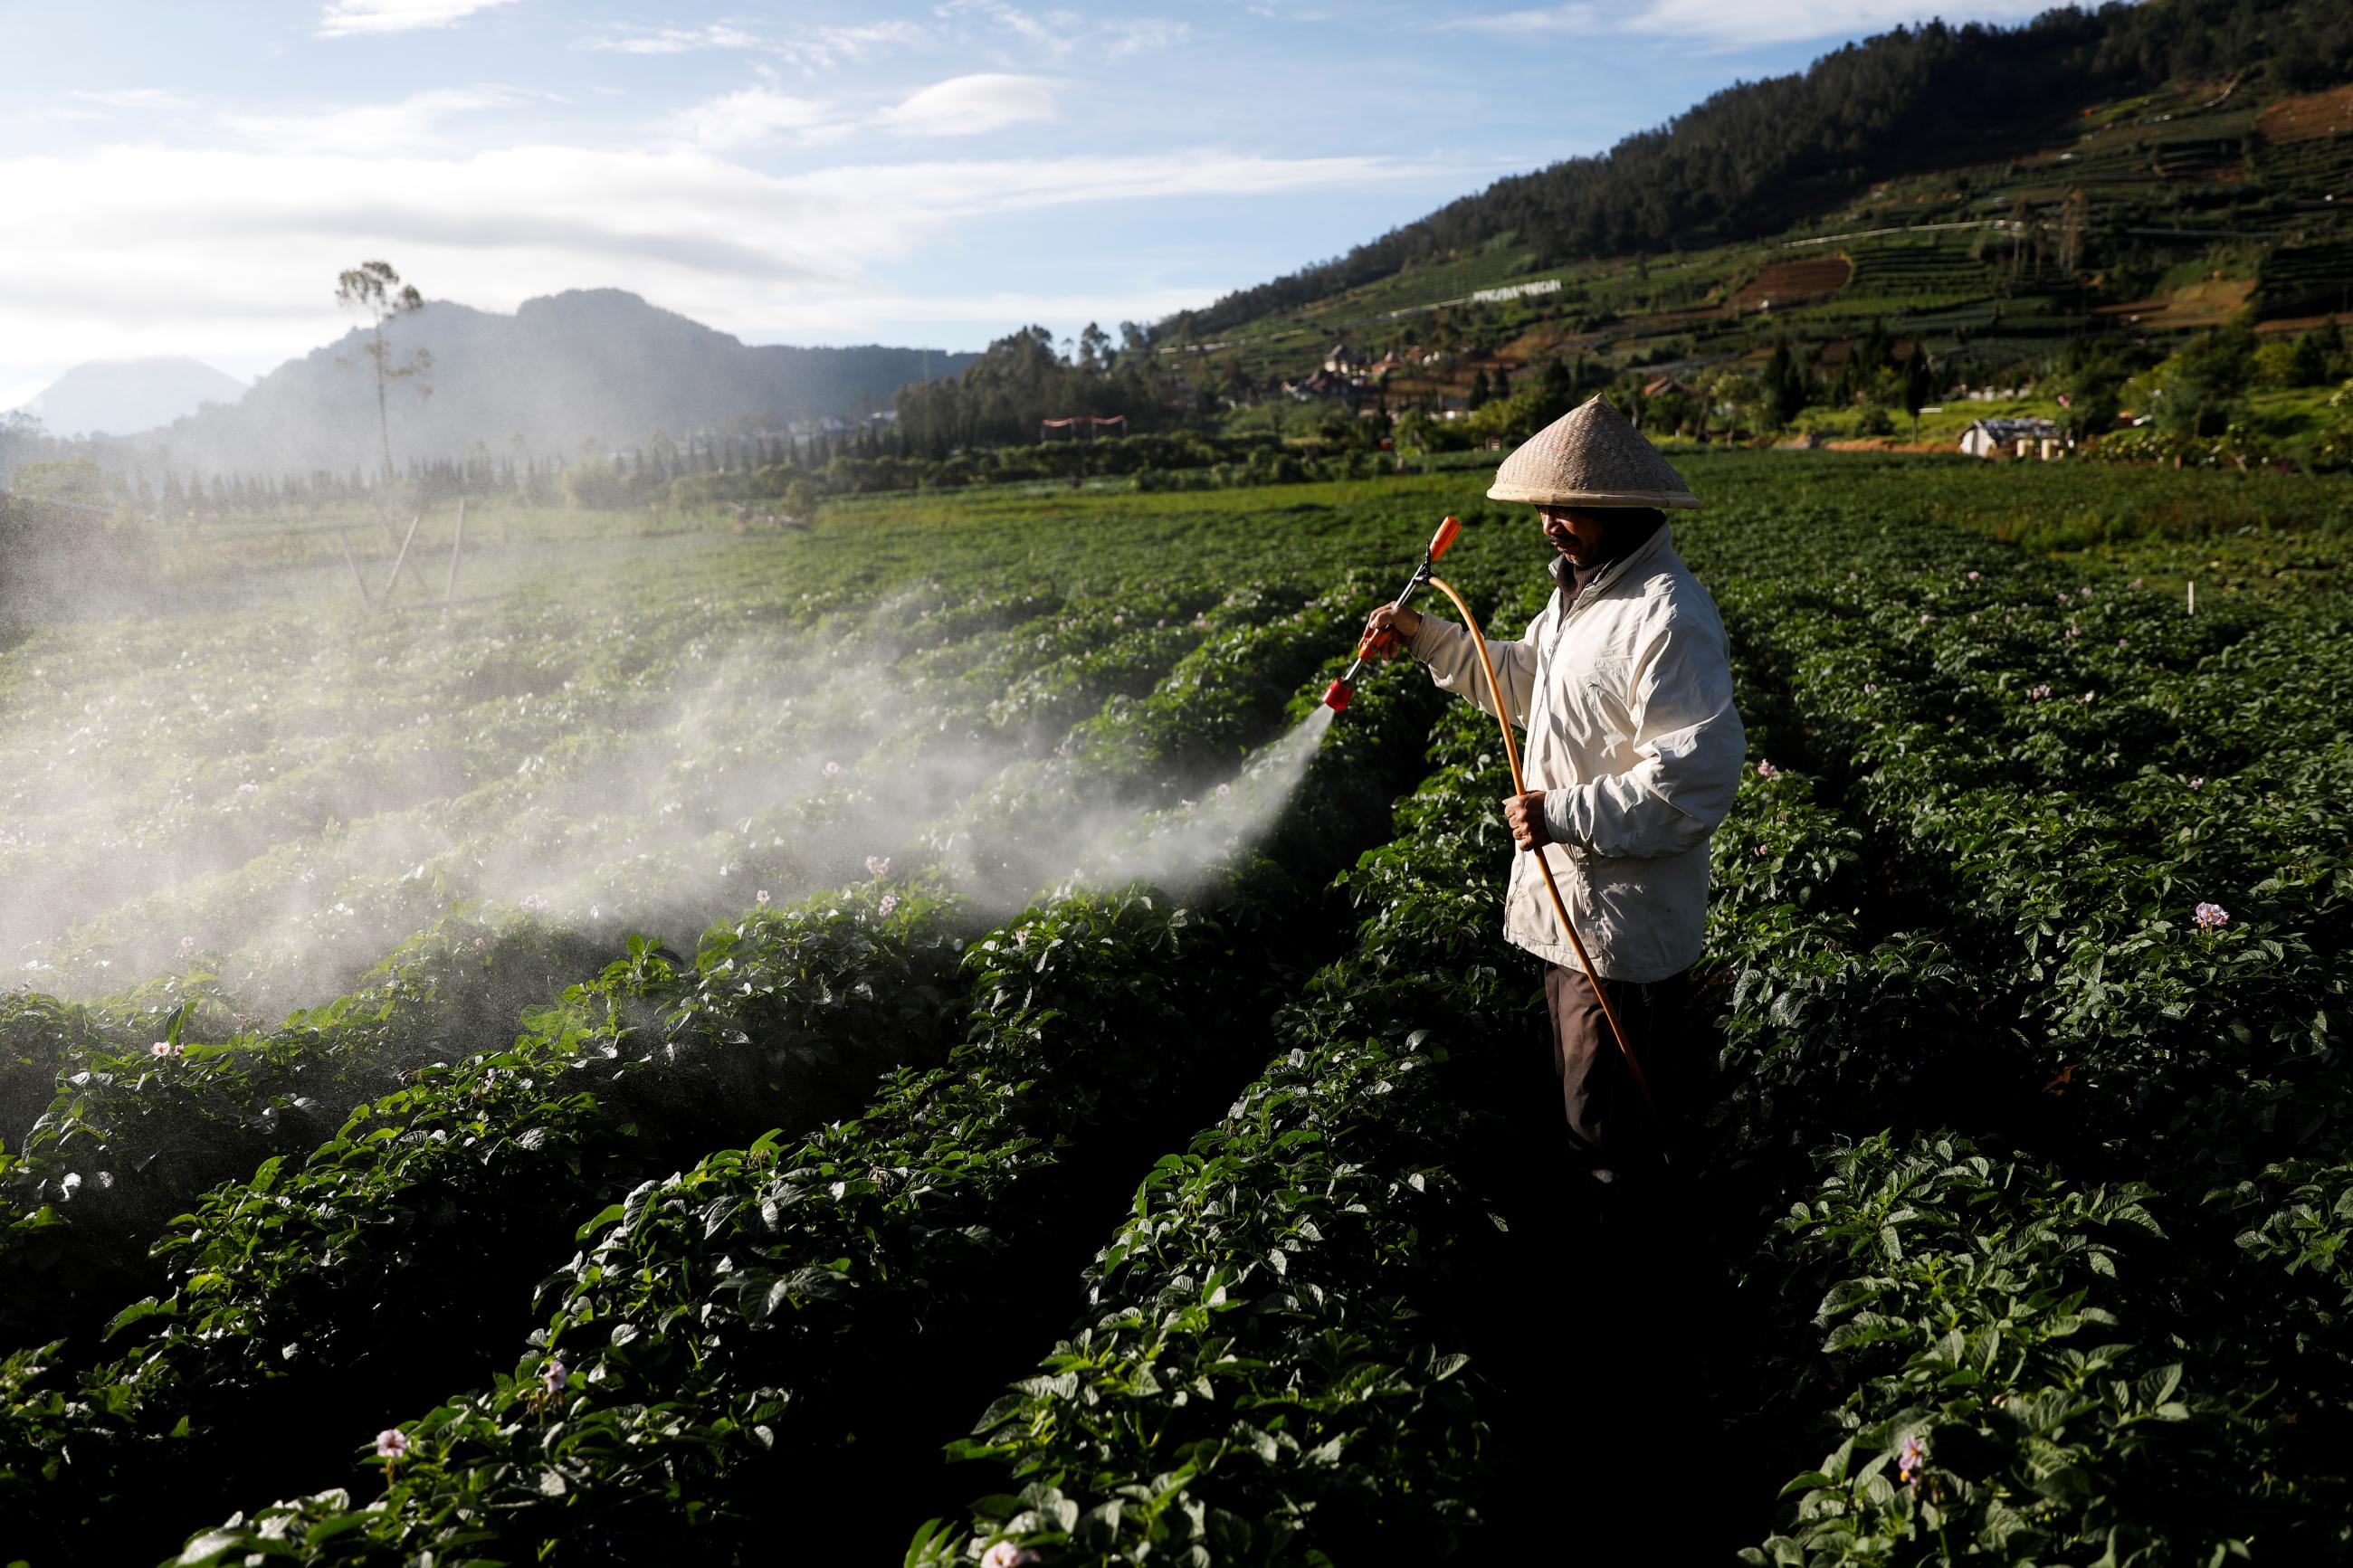 A local farmer sprays pesticide on a potato farm at Dieng mountain area in Banjarnegara, Central Java province, Indonesia, on November 16, 2020.